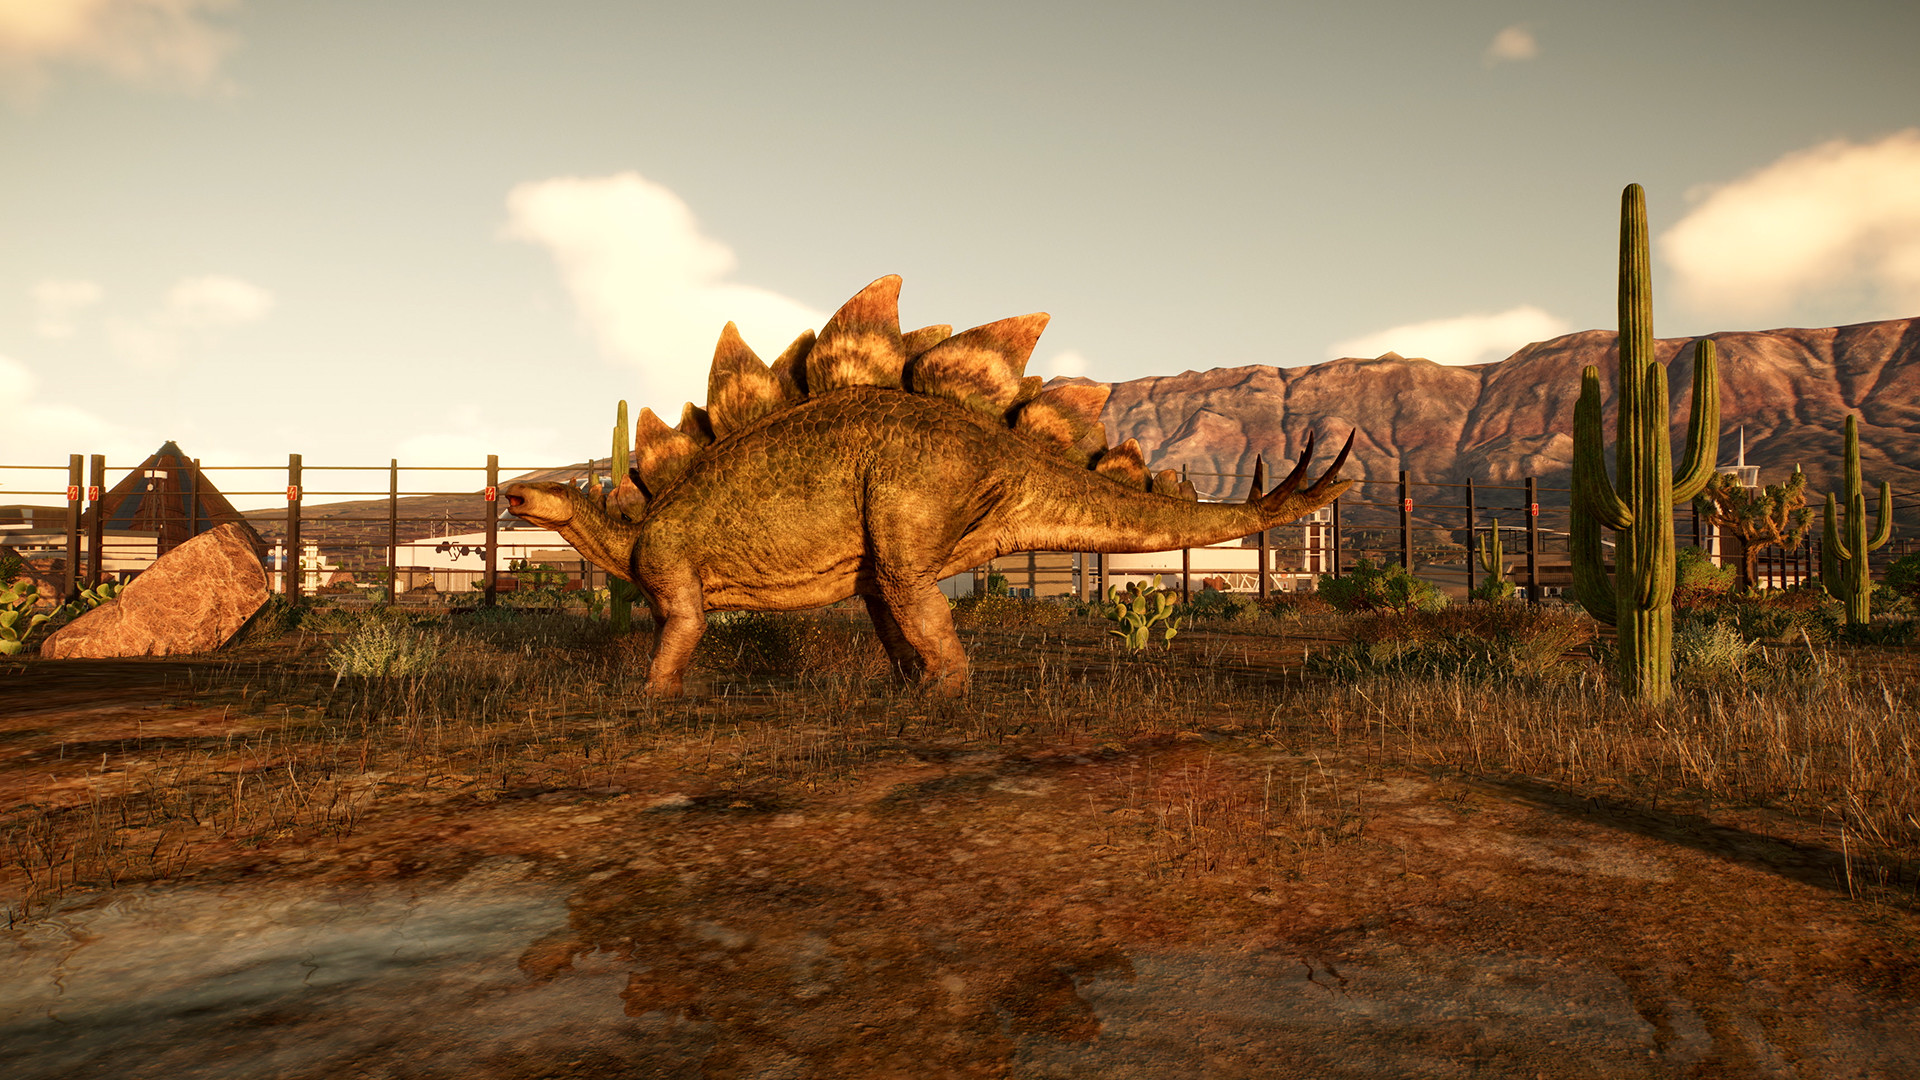 Jurassic World Evolution 2 Steam Account